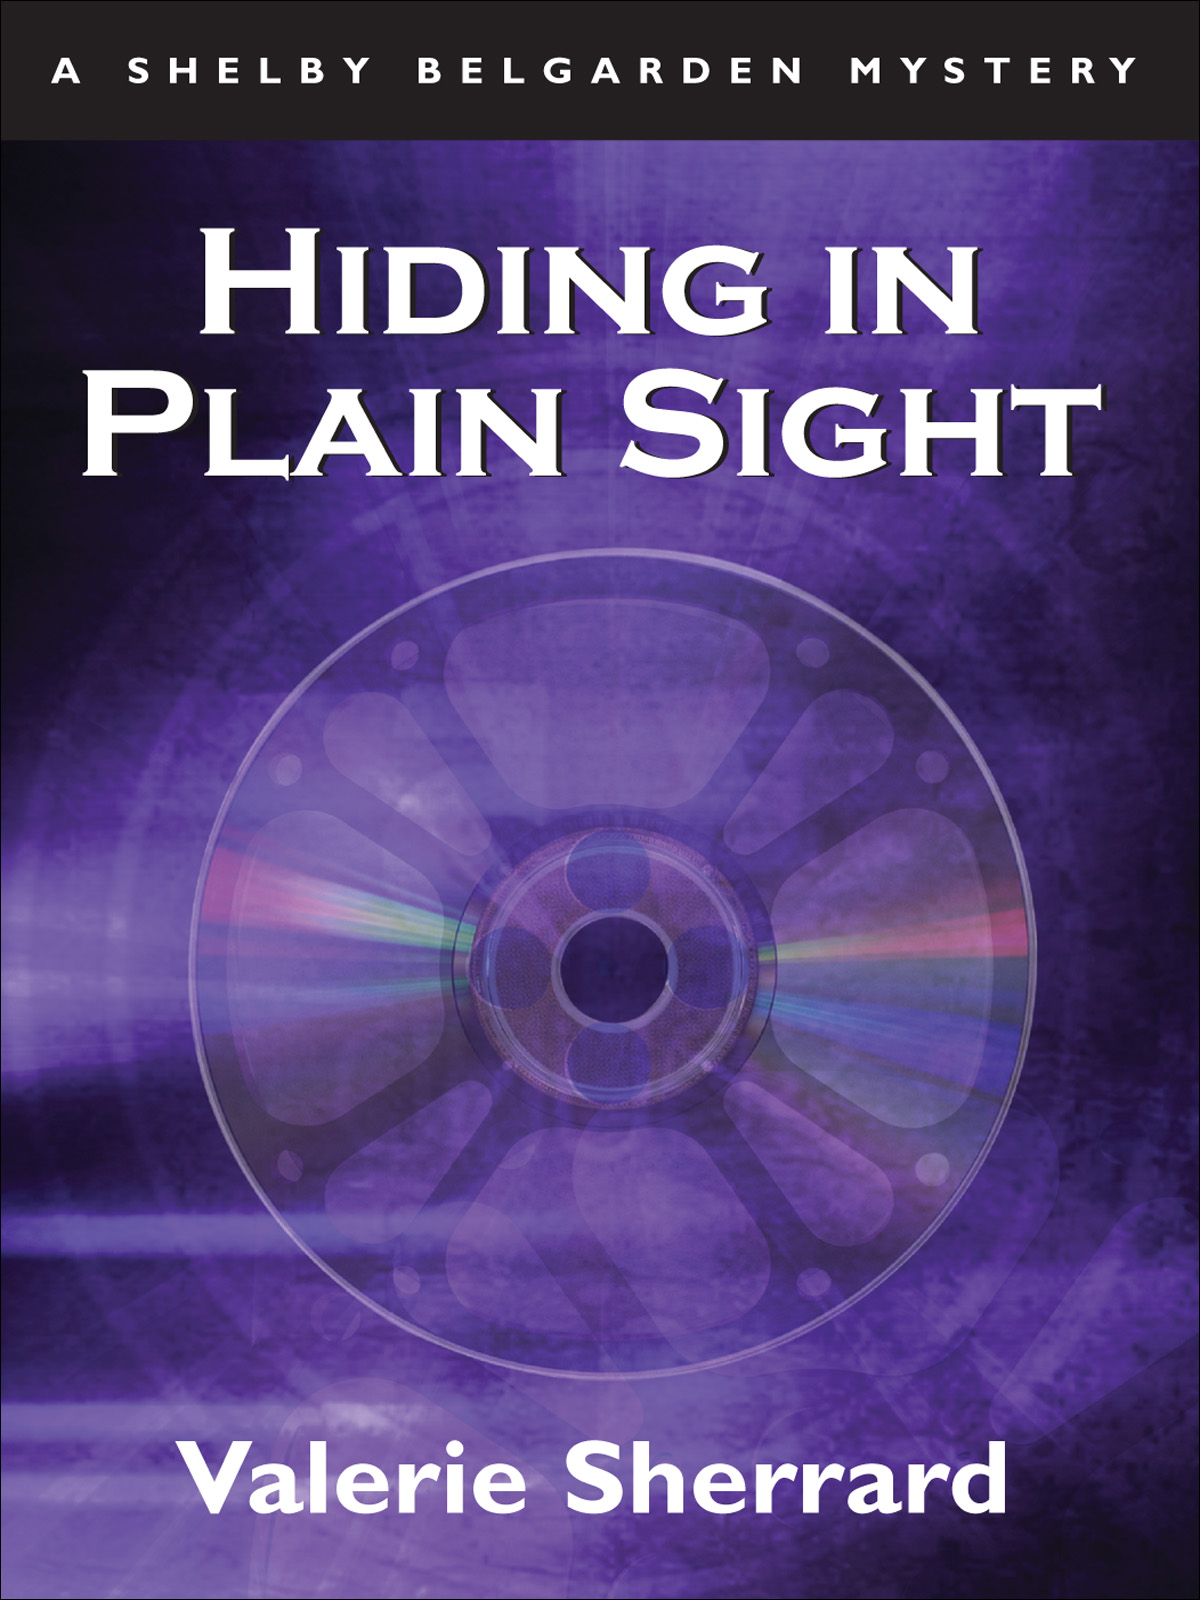 Hiding in Plain Sight (2005) by Valerie Sherrard